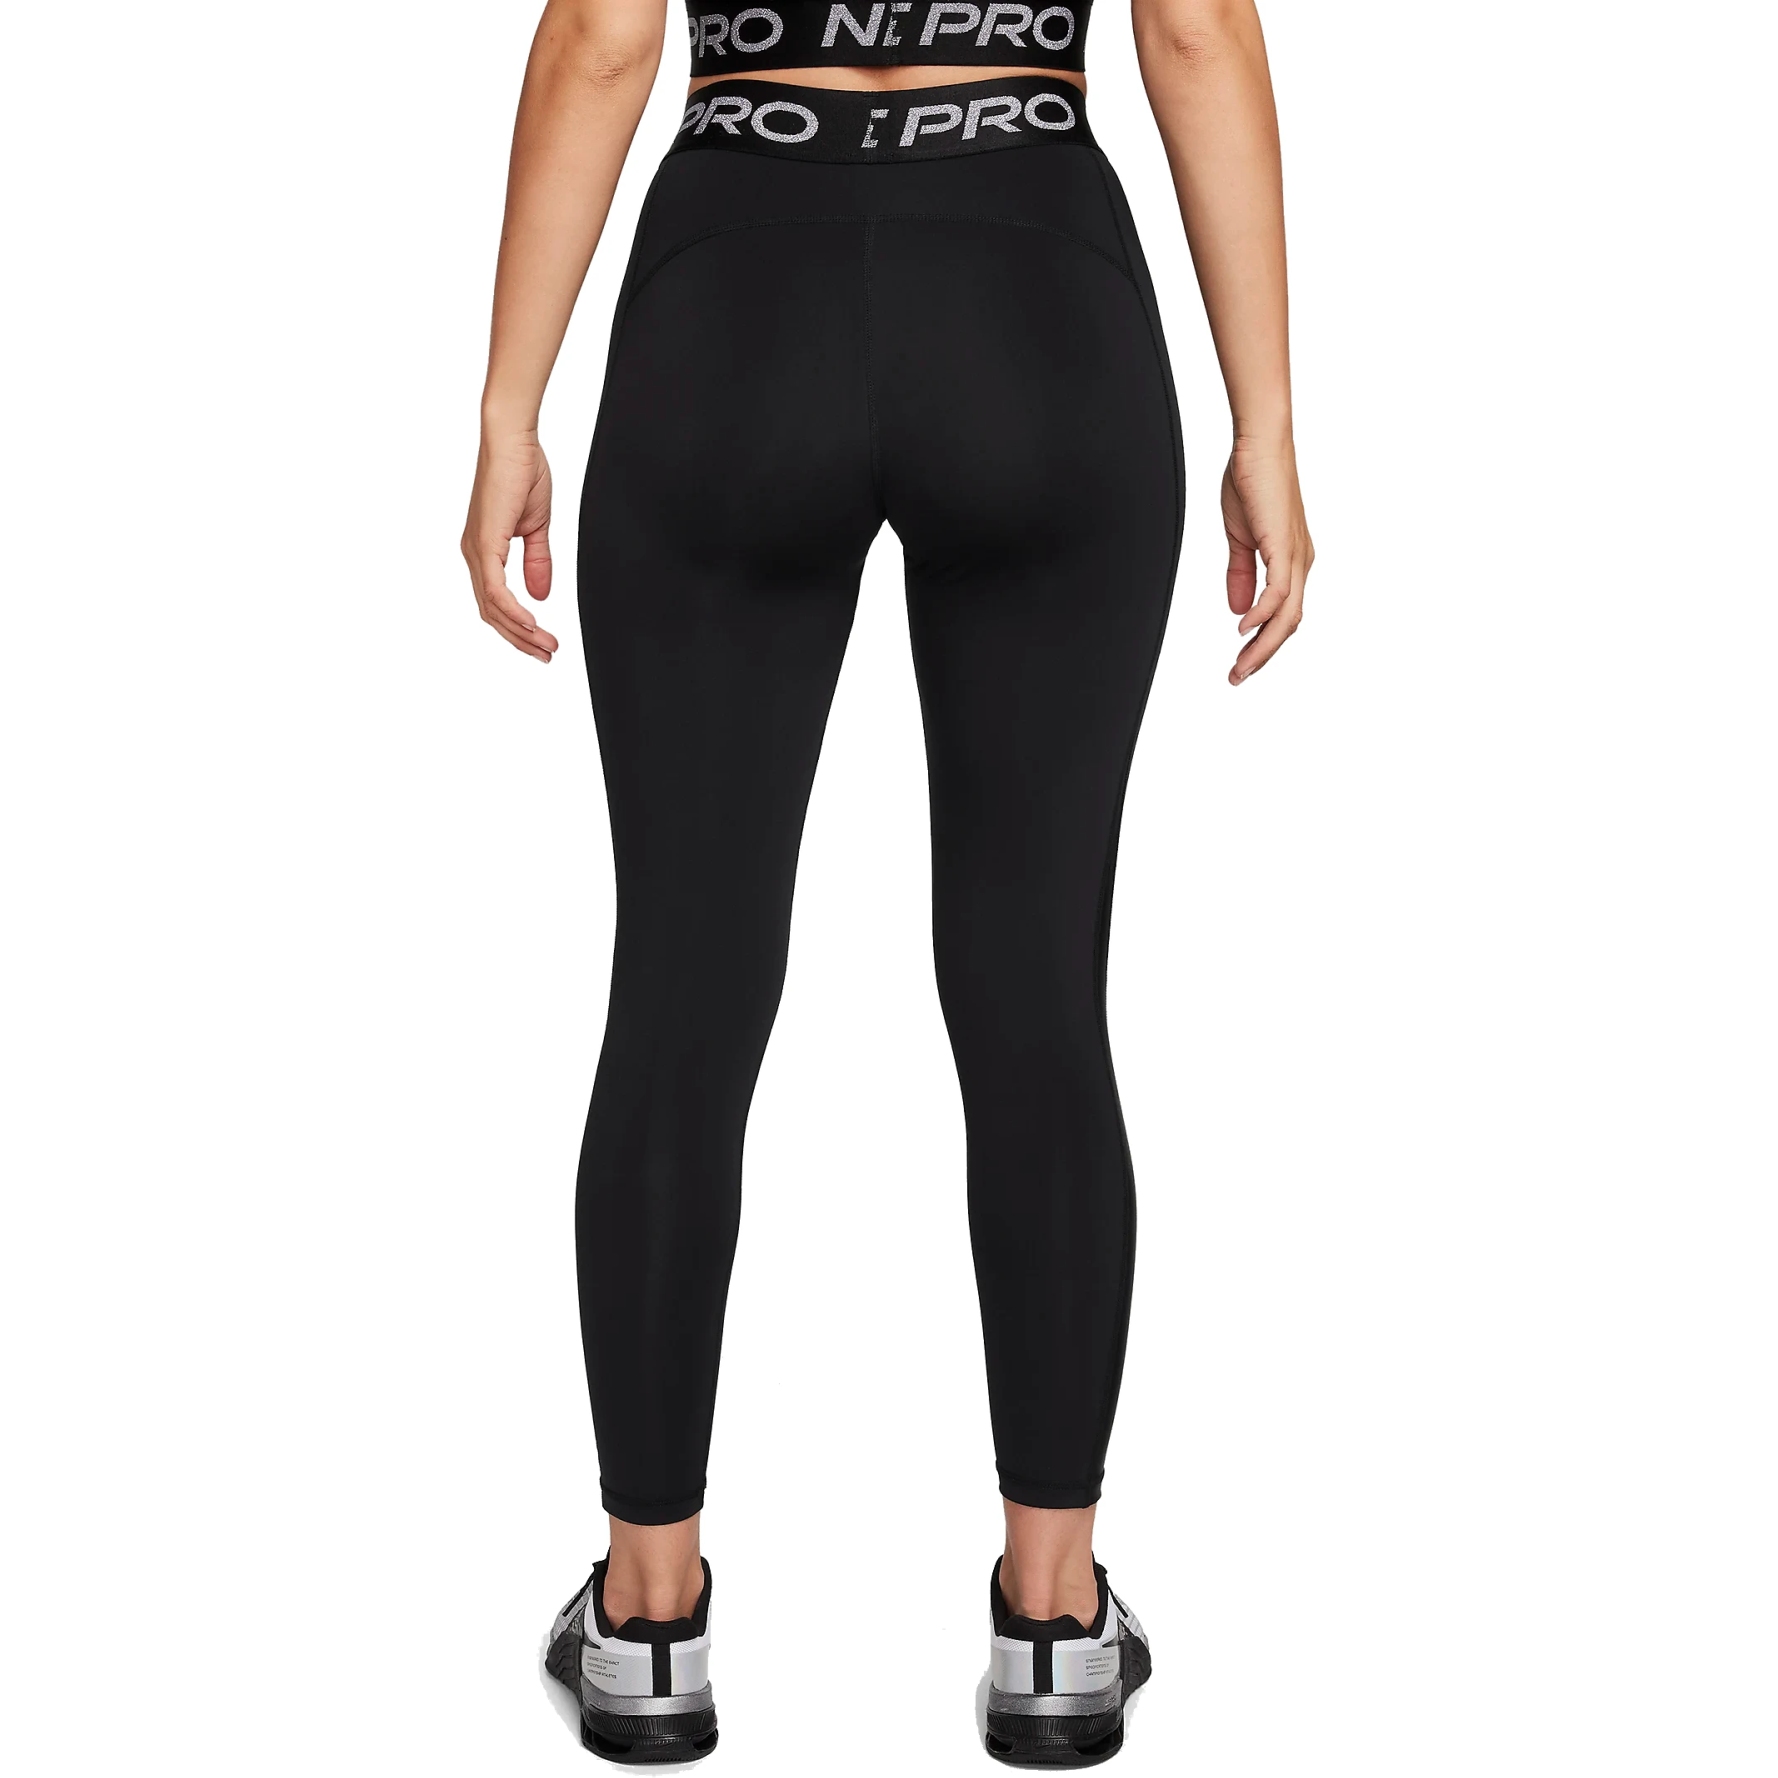 NEW! Nike [S] Women's Pro Comp. Yoga/Training Leggings, Black